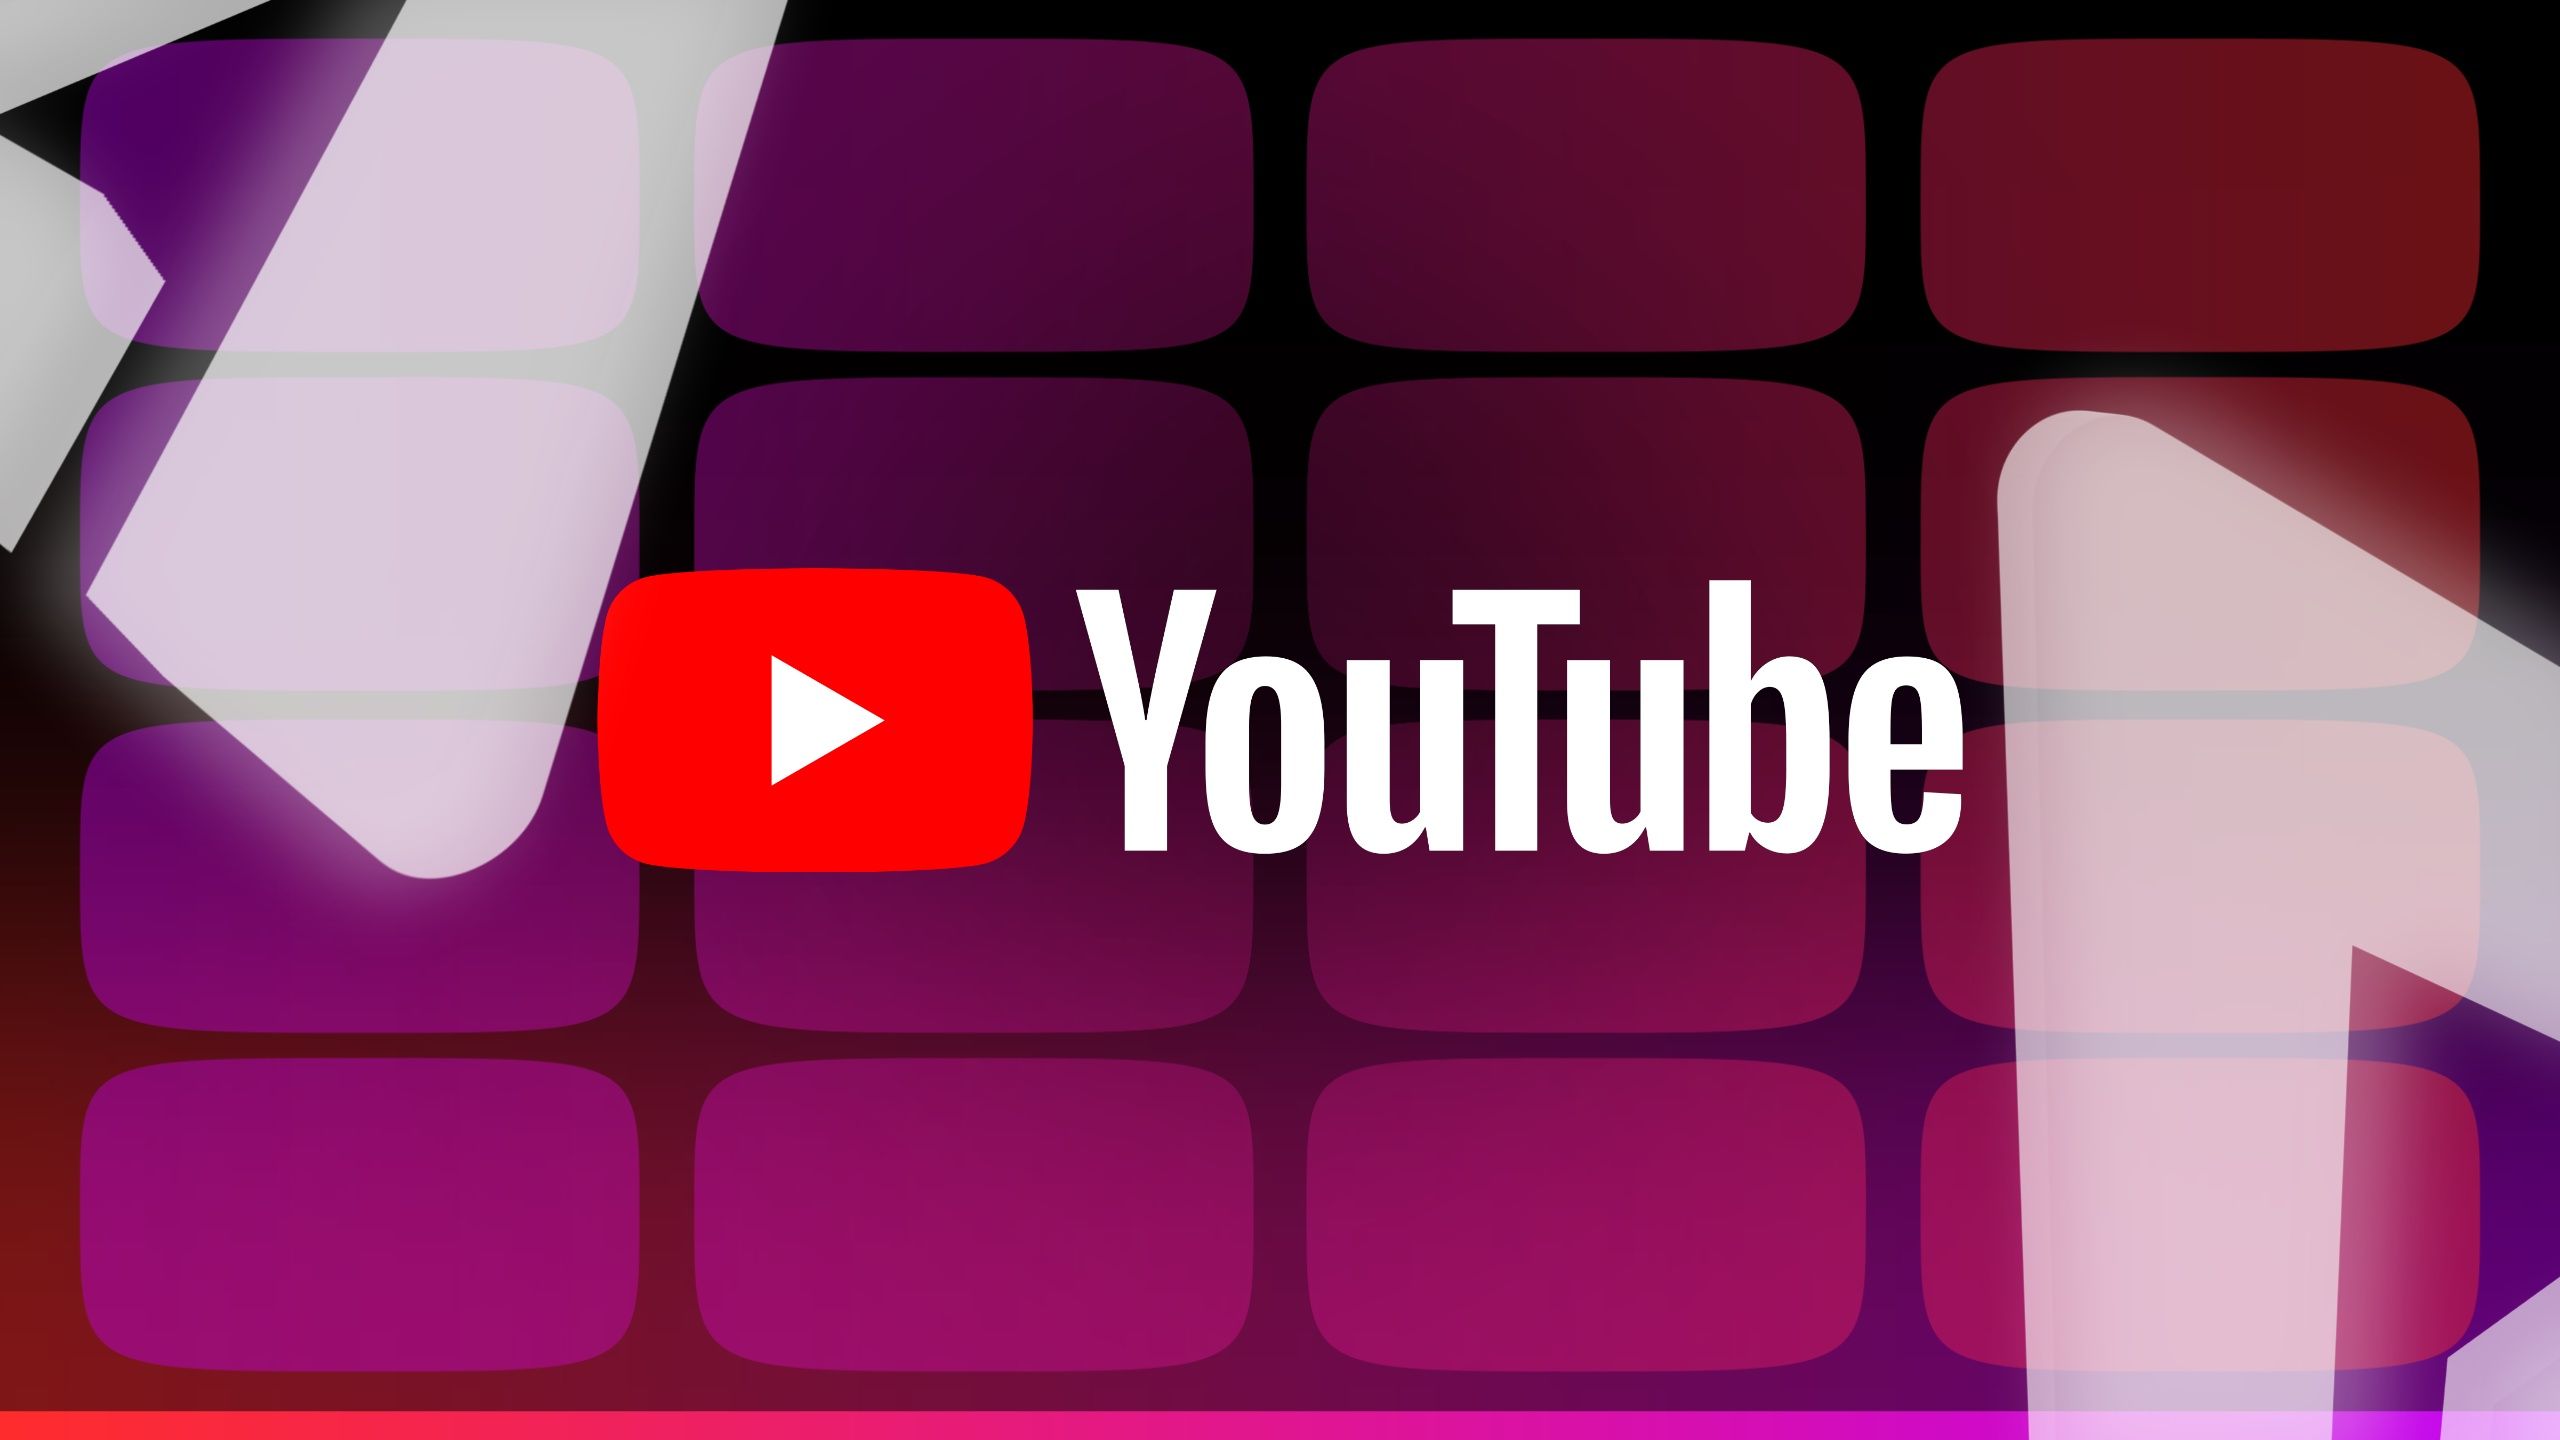 YouTube logo on a magenta background